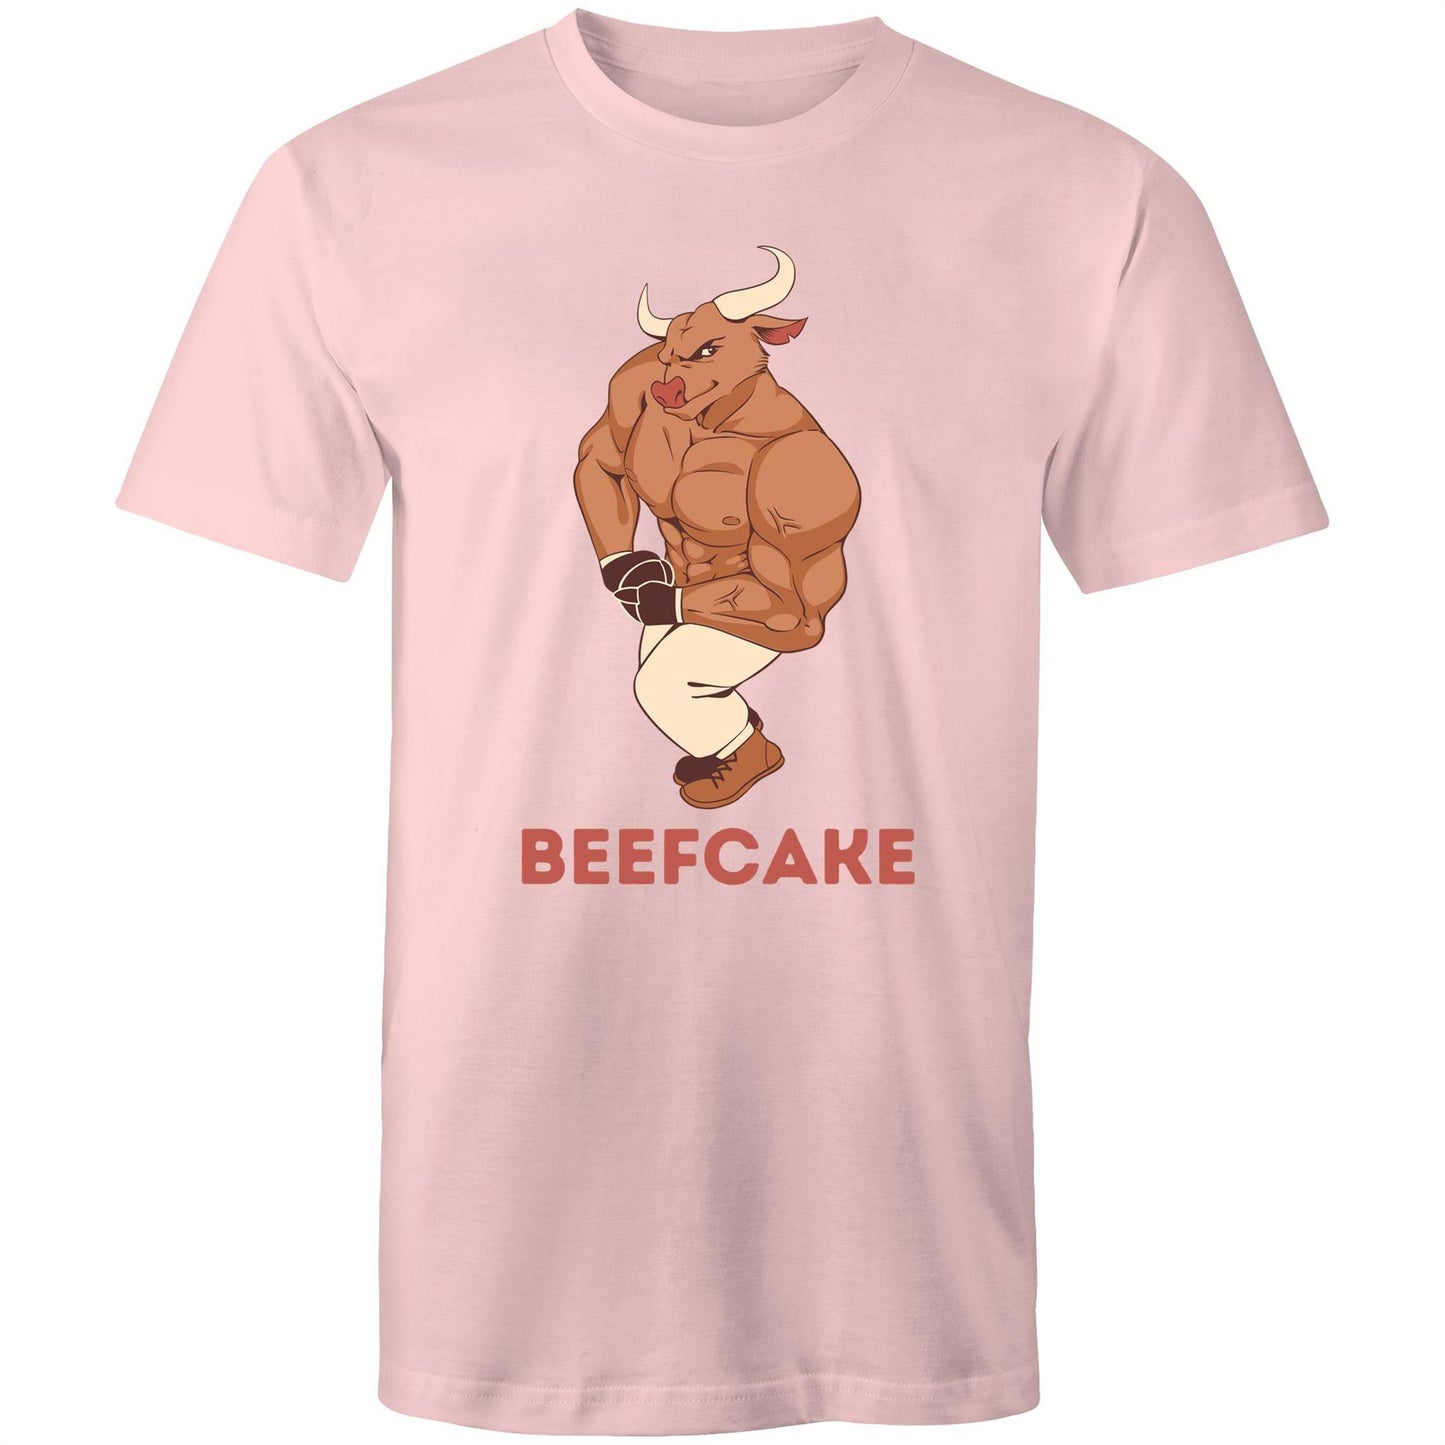 Beefcake, Bull, Gym - Mens T-Shirt Pink Fitness T-shirt Fitness